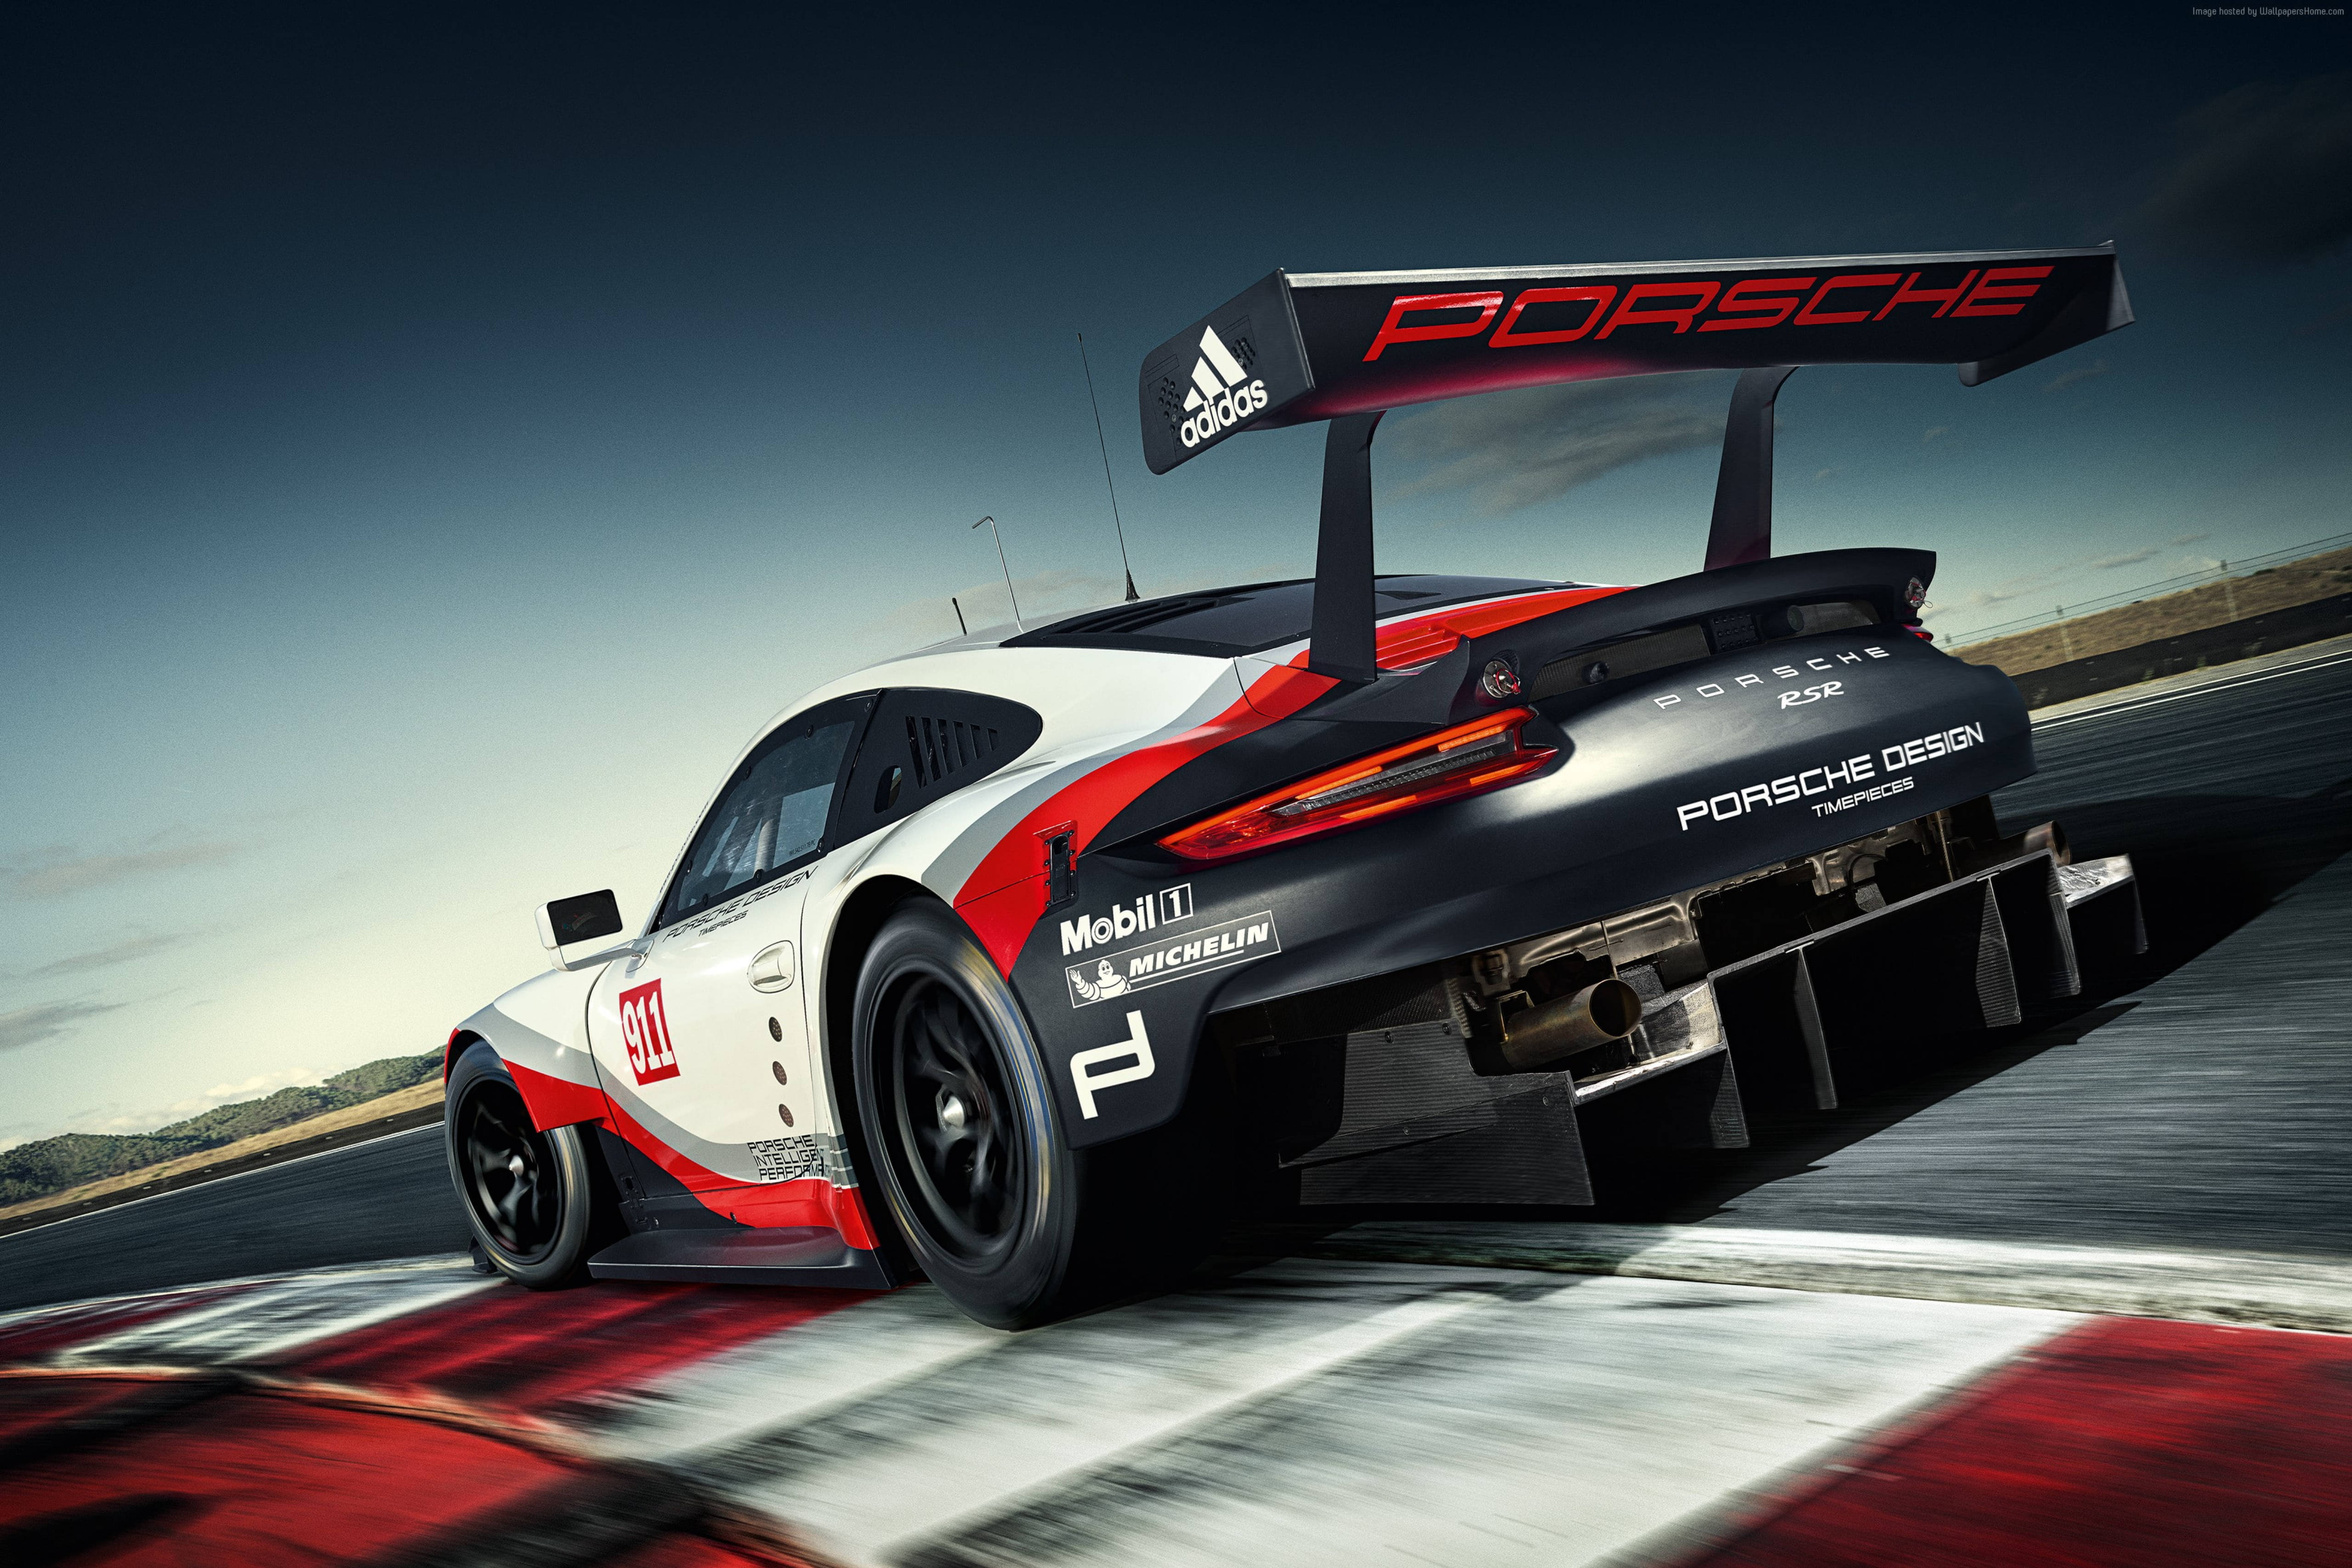 Racing sports cars cars. Porsche 911 RSR. Porsche 911 gt3 RSR 2017. 911 RSR (991). Porshe 911 RSR 2017.